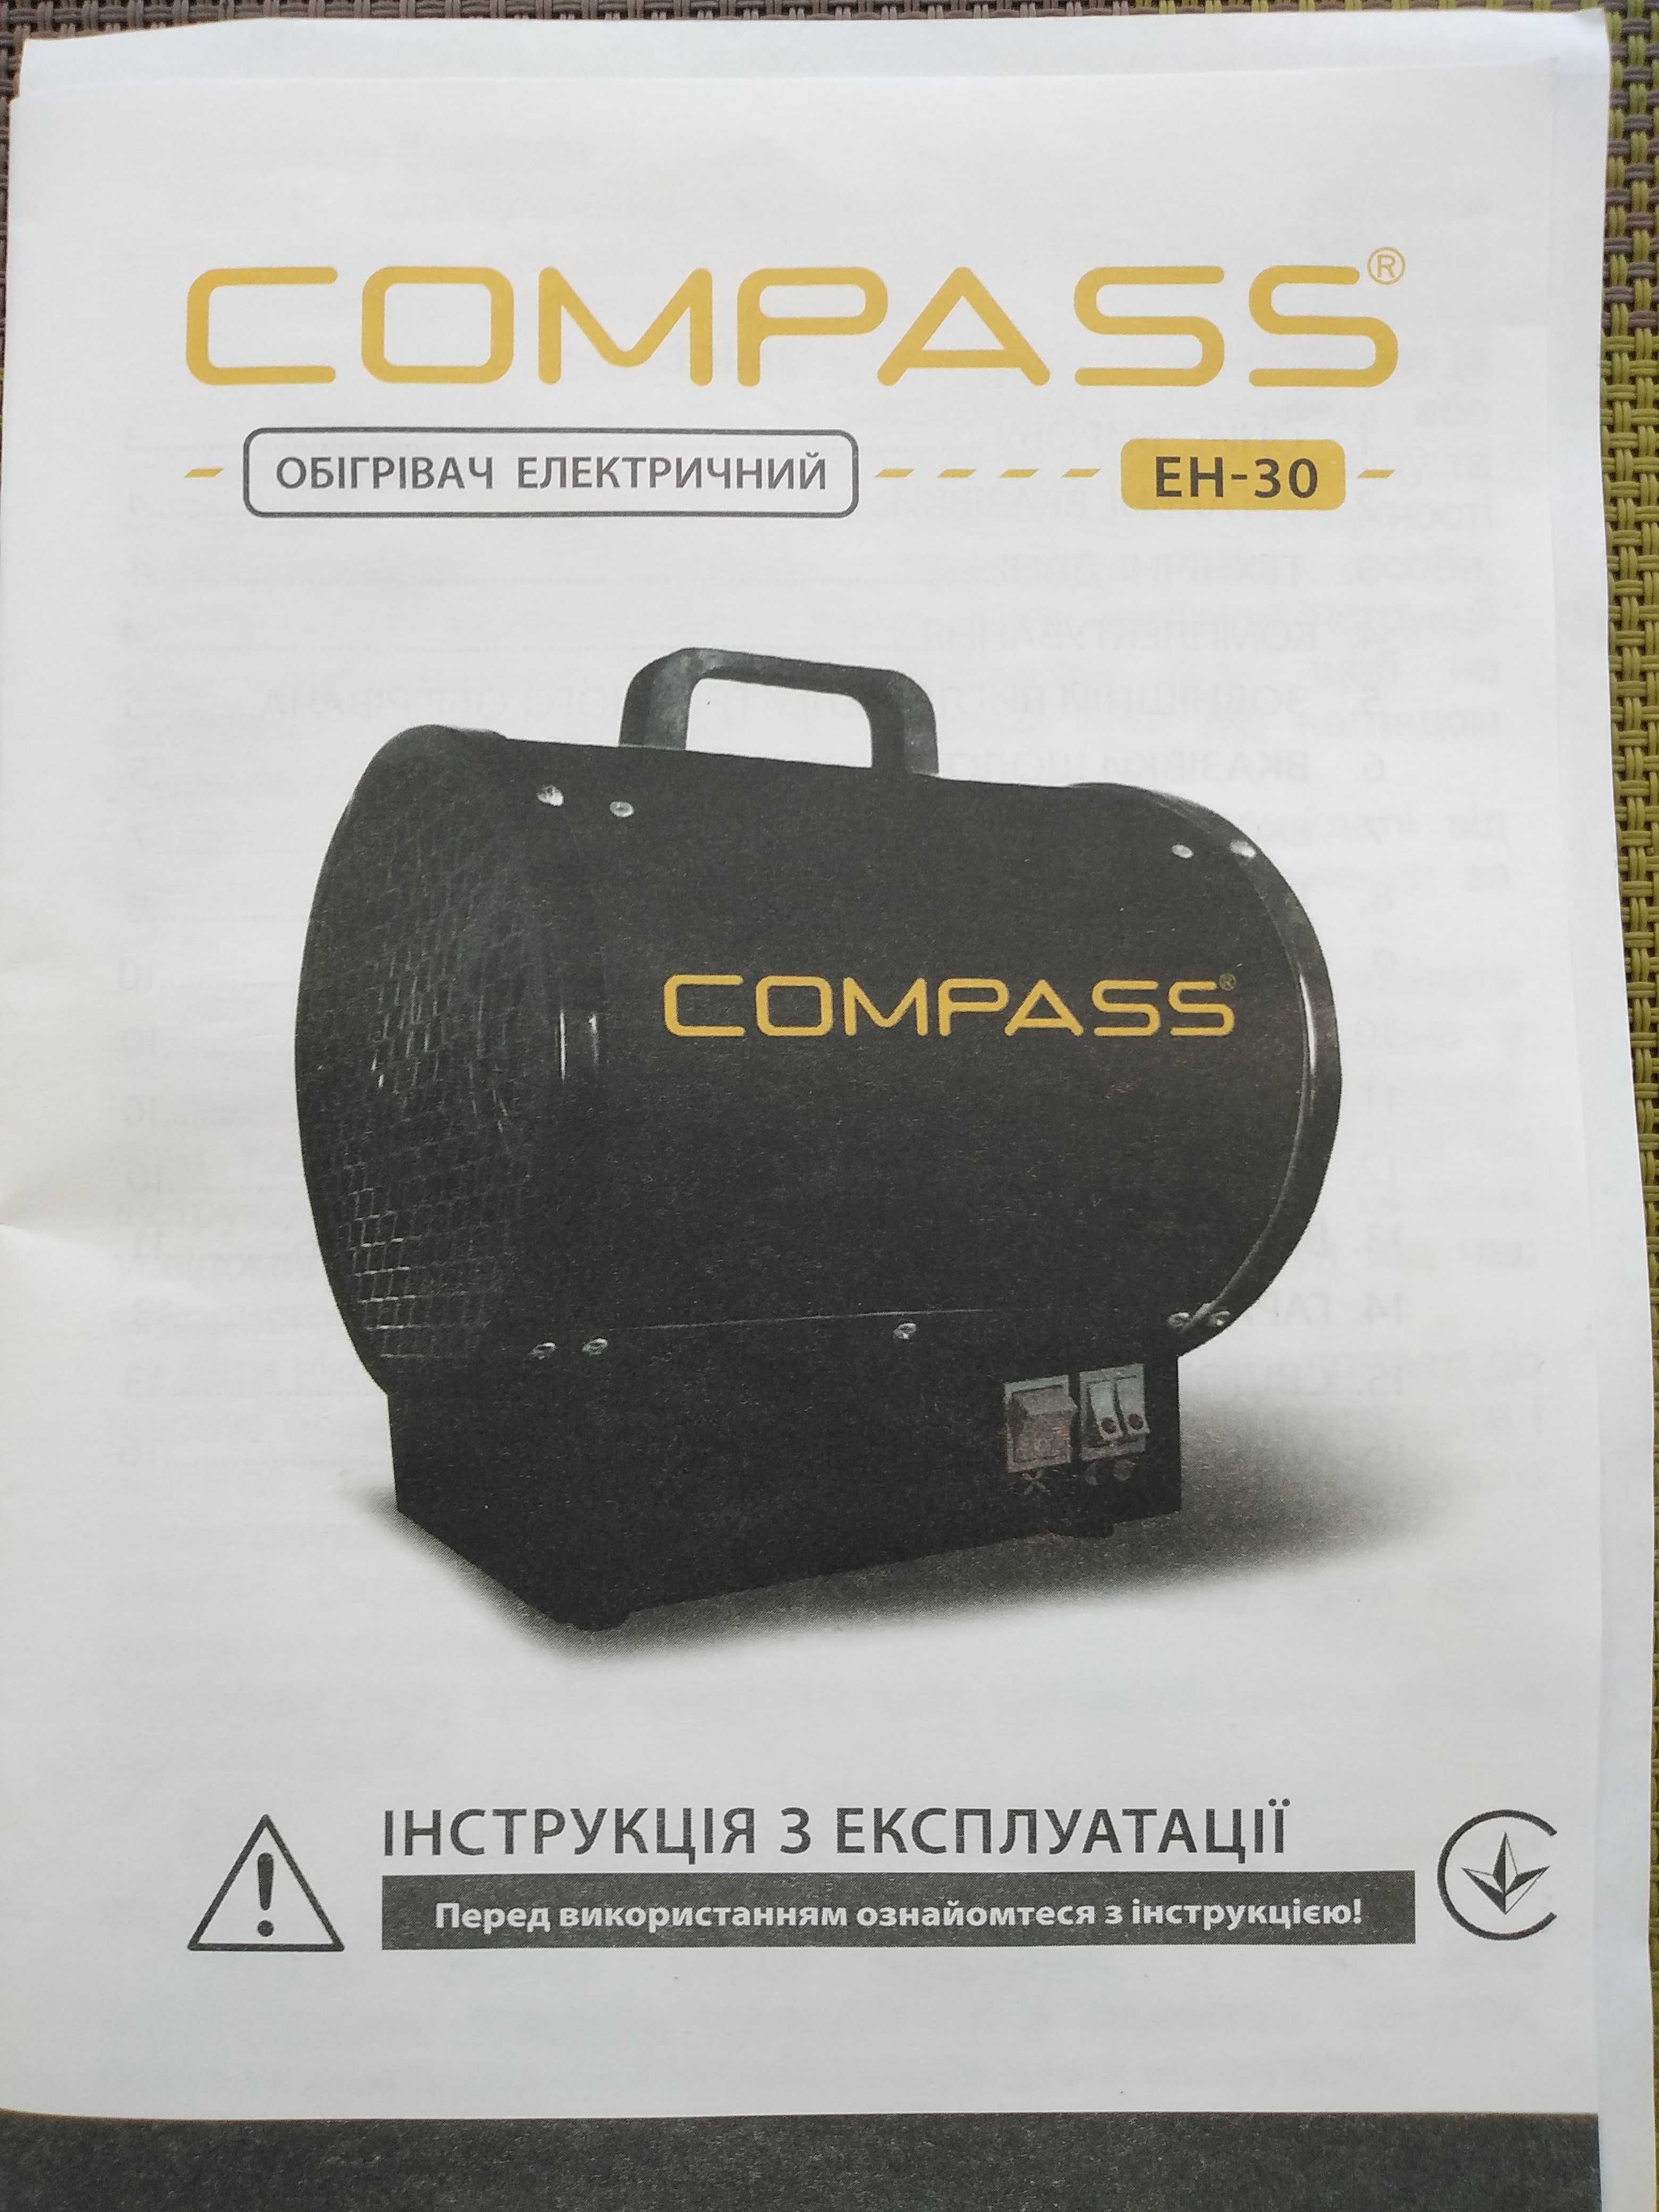 Обігрівач електричний ЕН-30 COMPASS